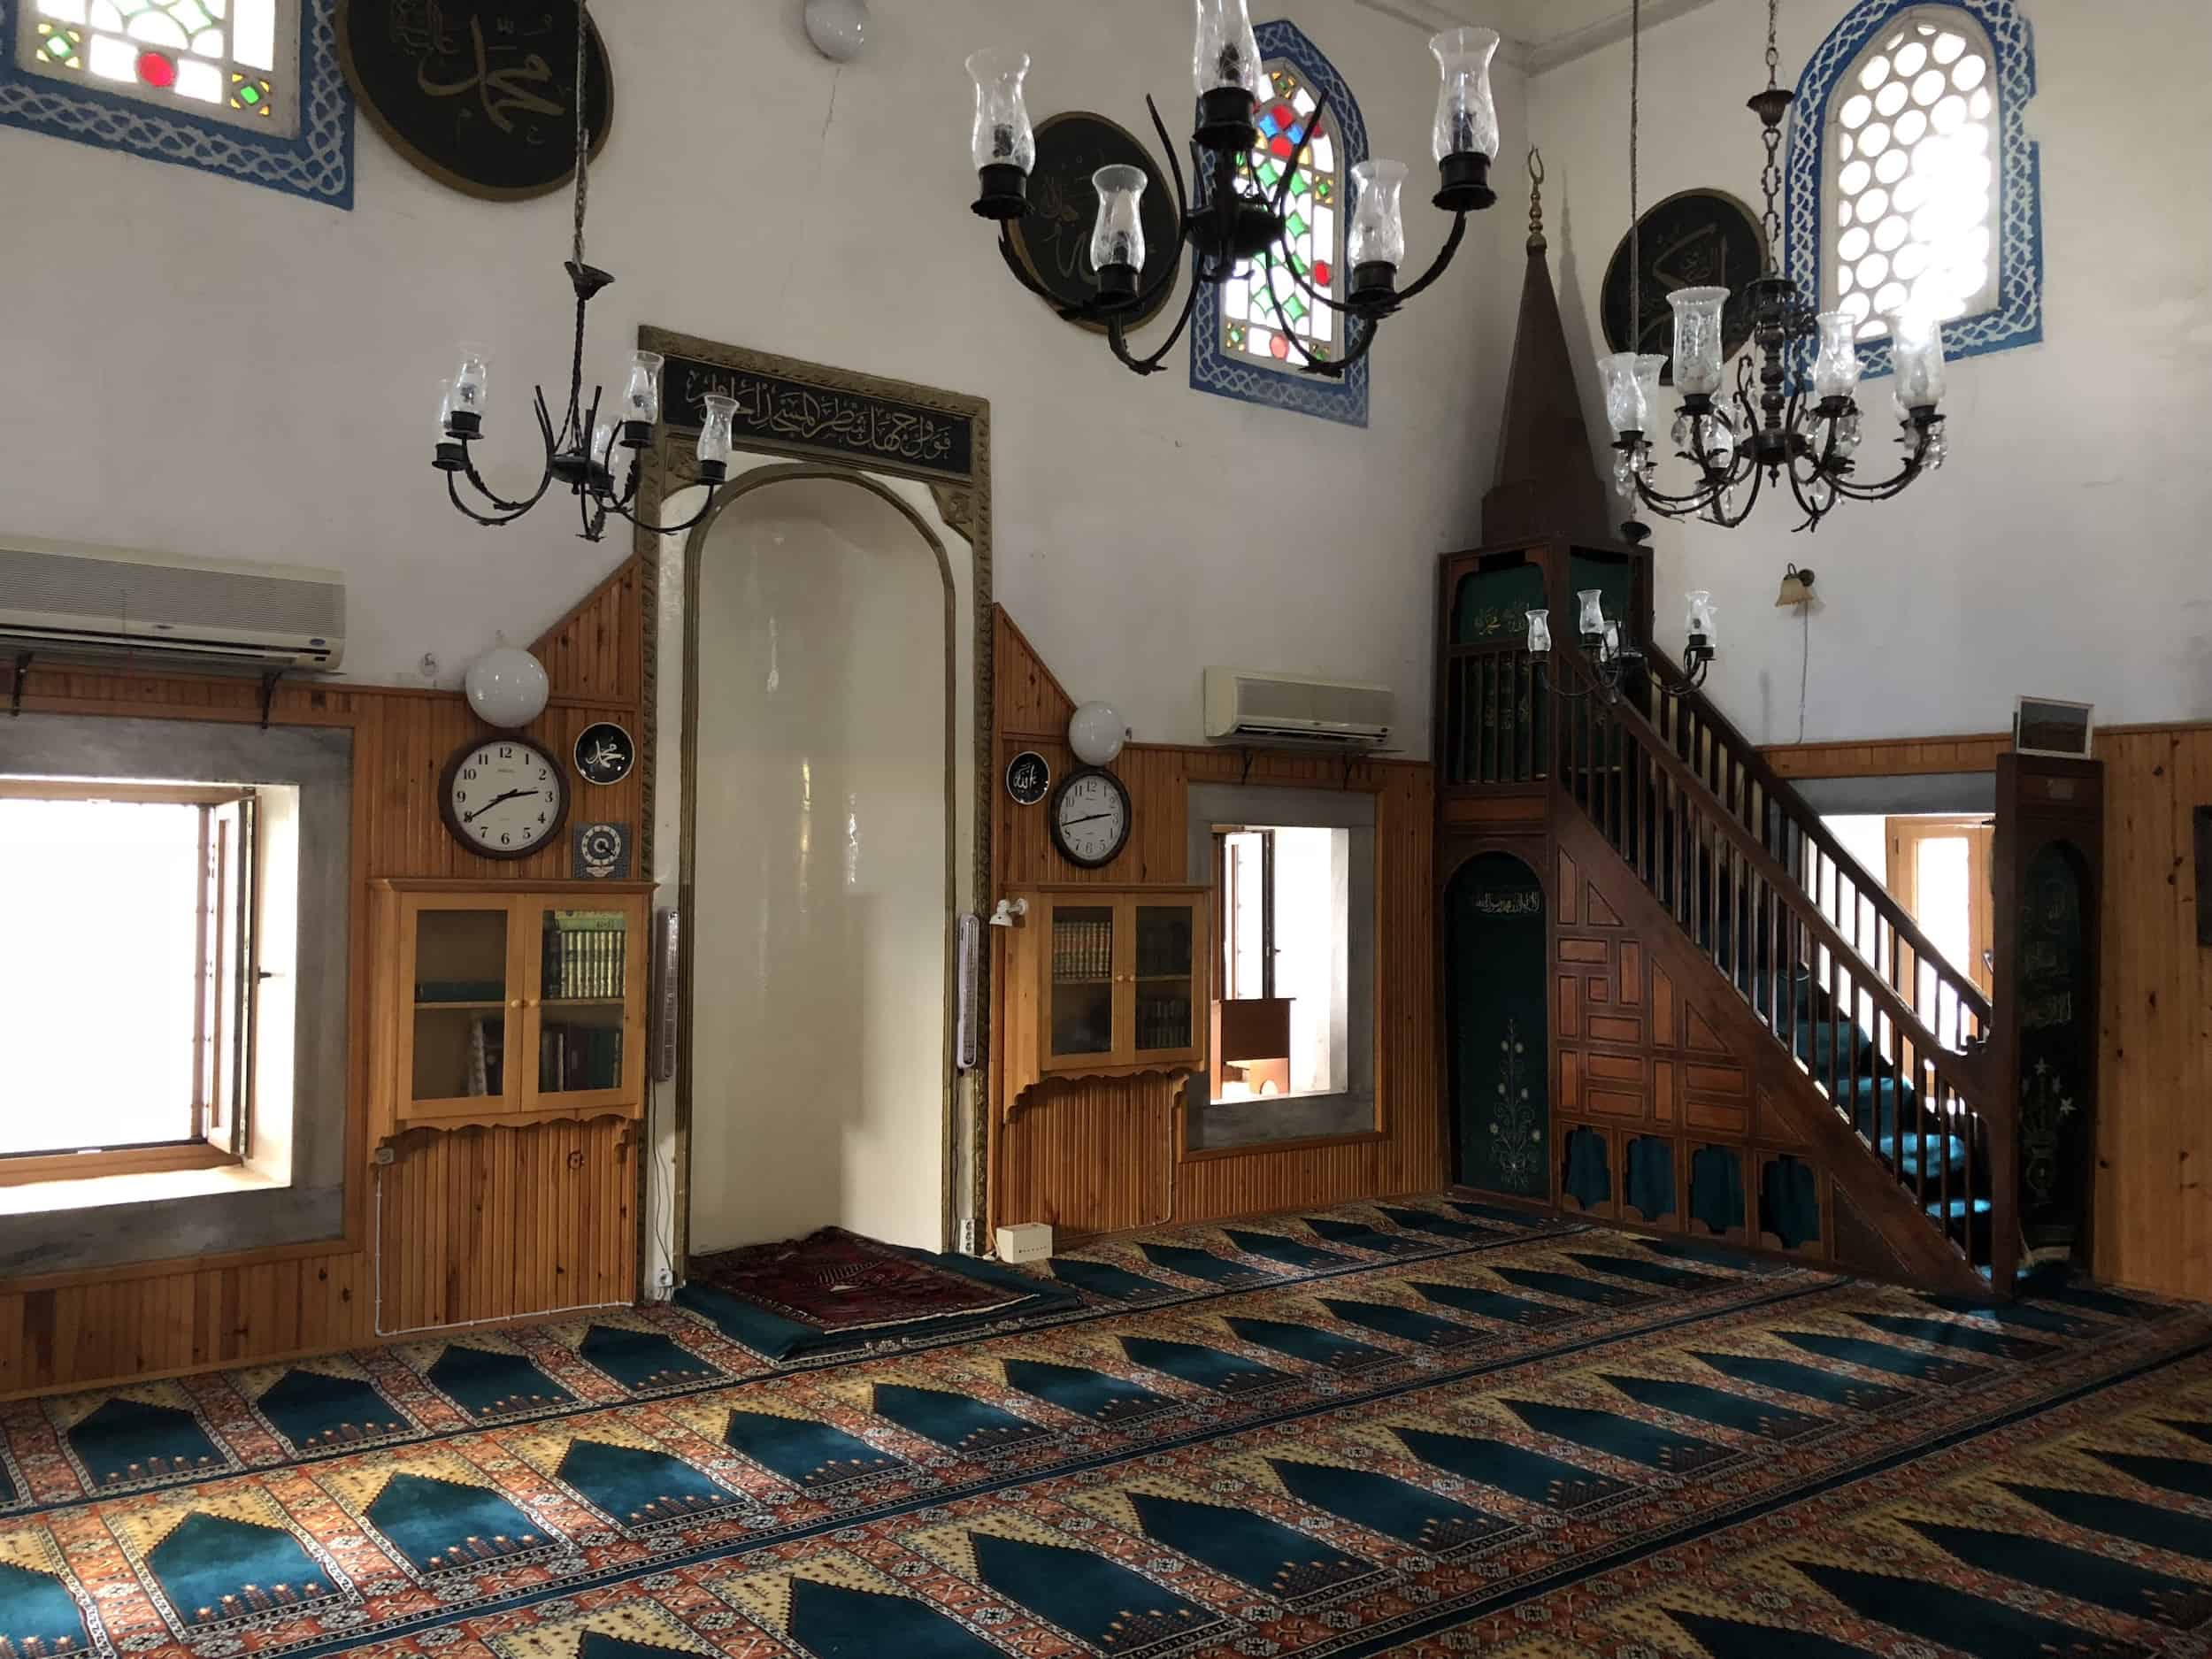 Prayer hall of the Ishak Pasha Mosque in Cankurtaran, Istanbul, Turkey